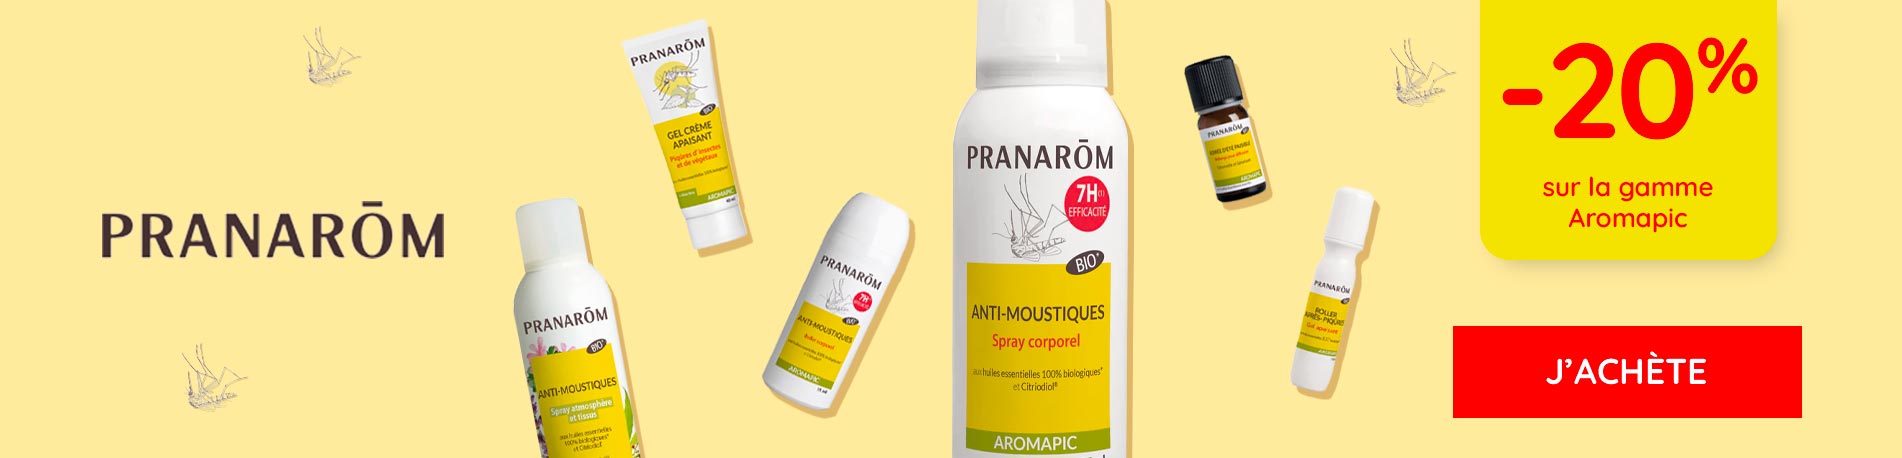 Promotion Pranarom anti-moustique